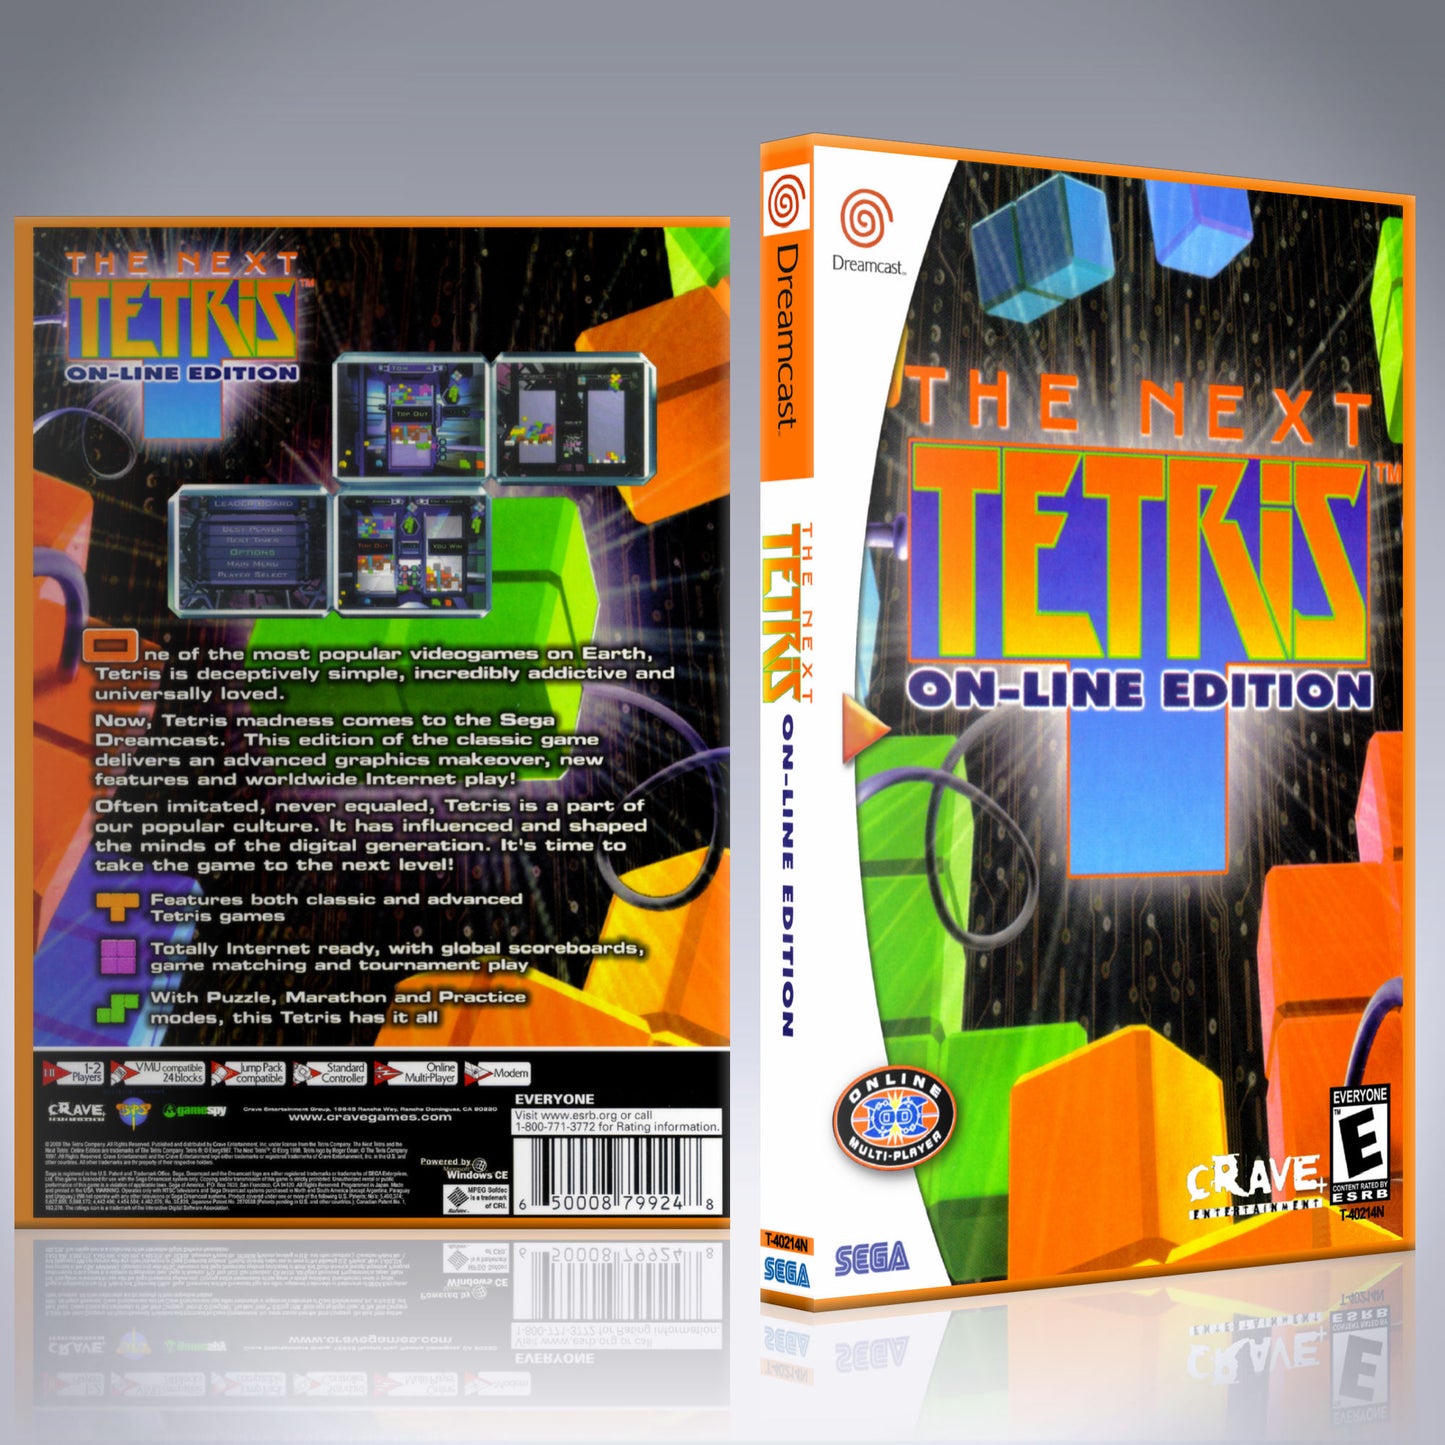 Dreamcast Custom Case - NO GAME - The Next Tetris - Online Edition